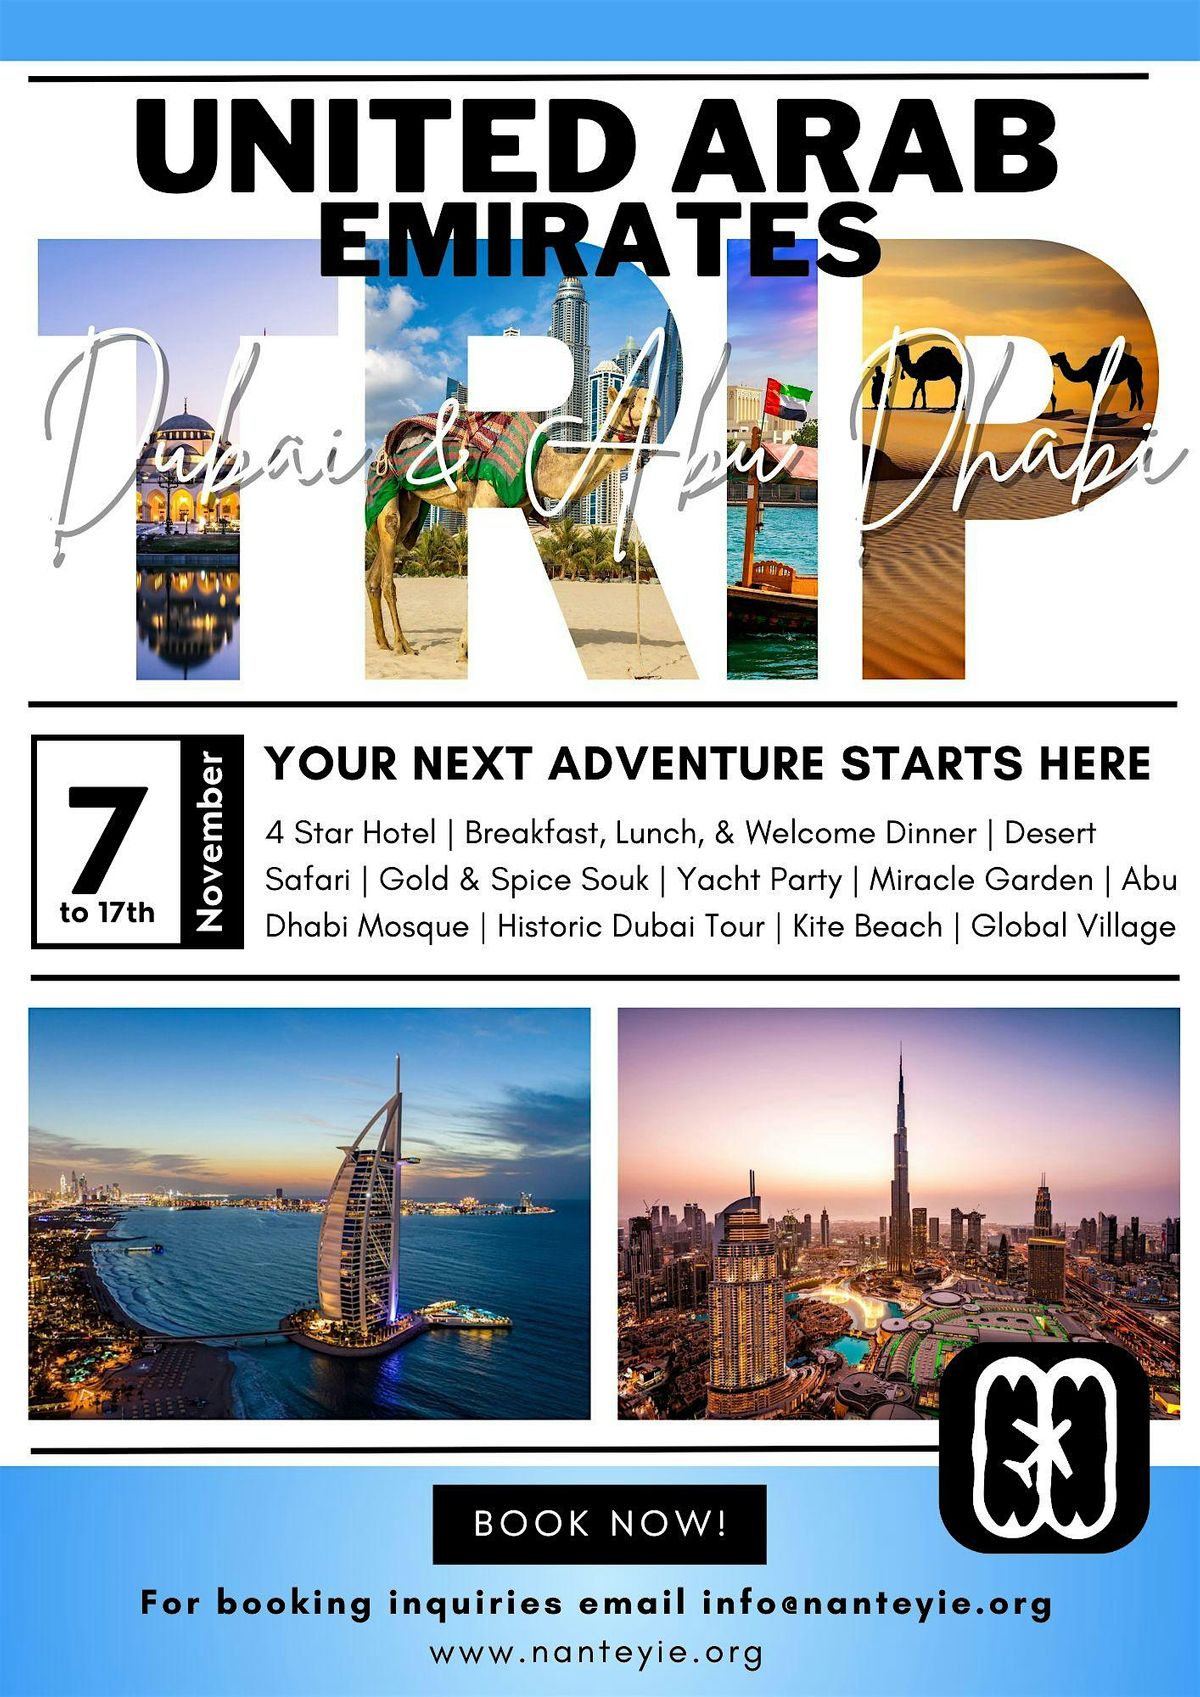 Travel to Dubai and Abu Dhabi from November 7th-17th!